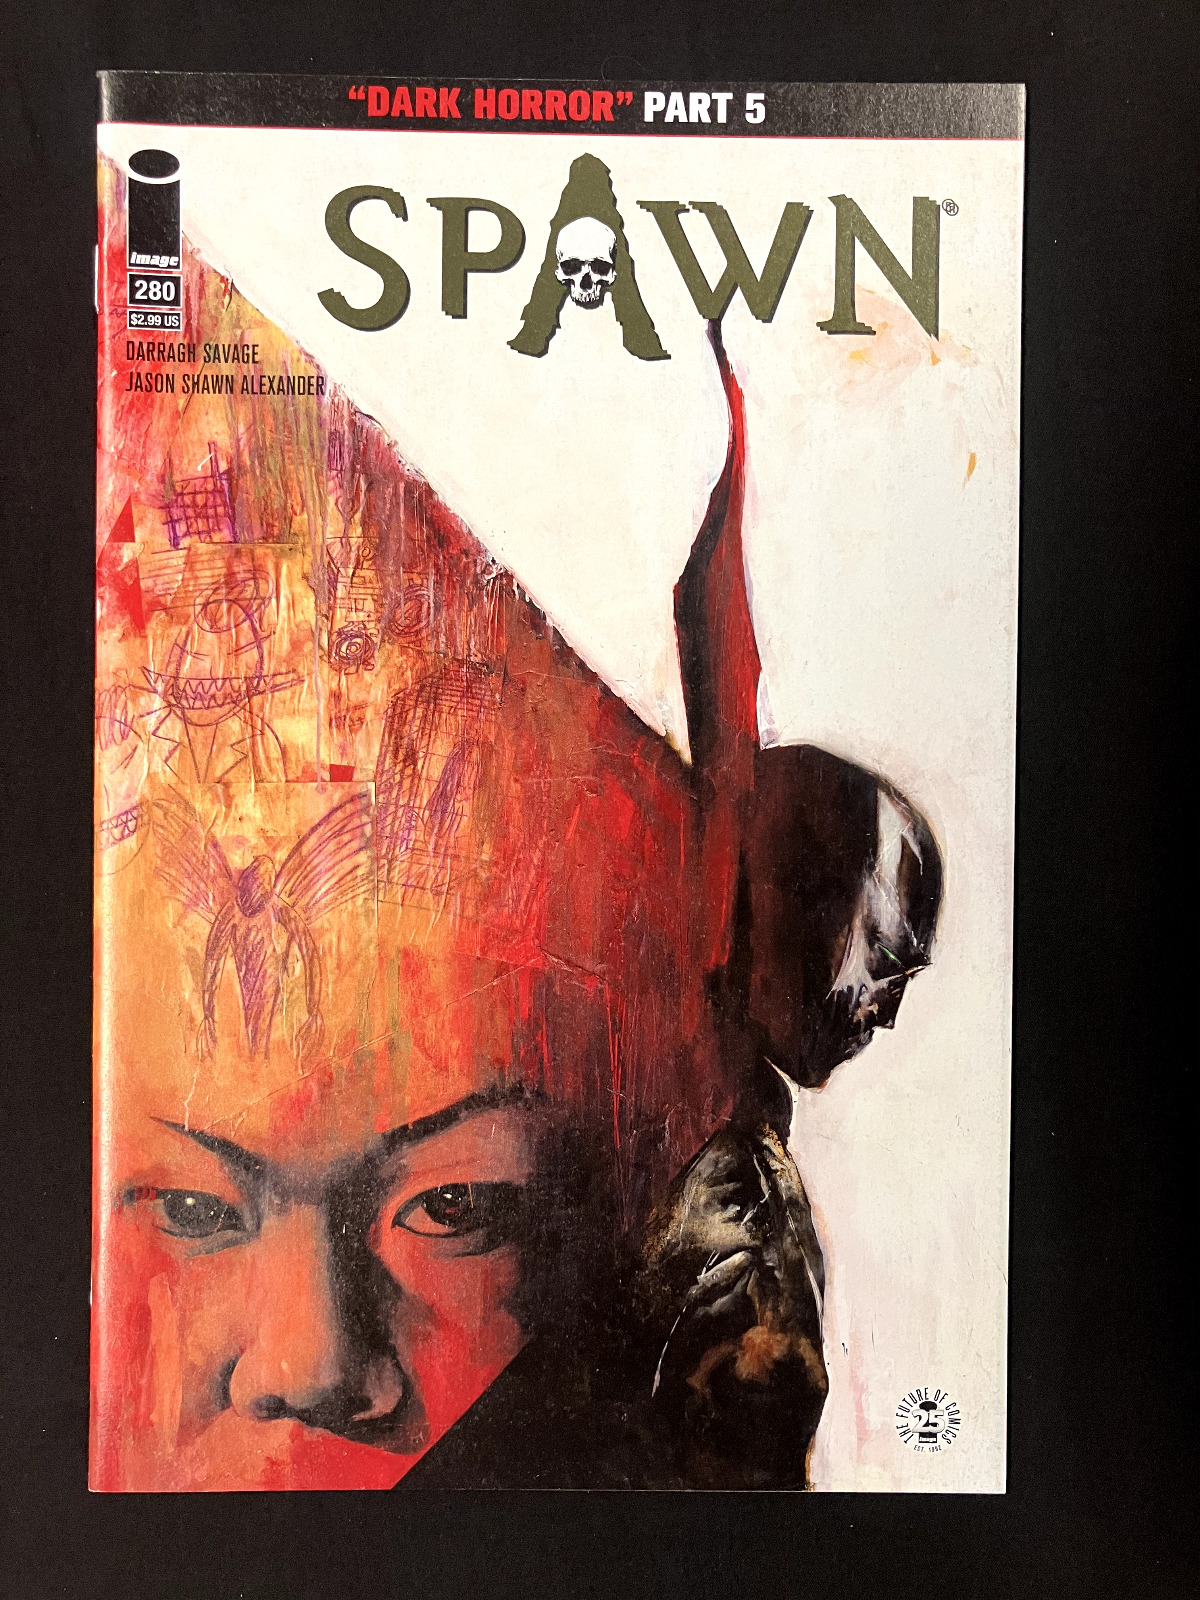 Spawn #280 Image Comics Nov 2017